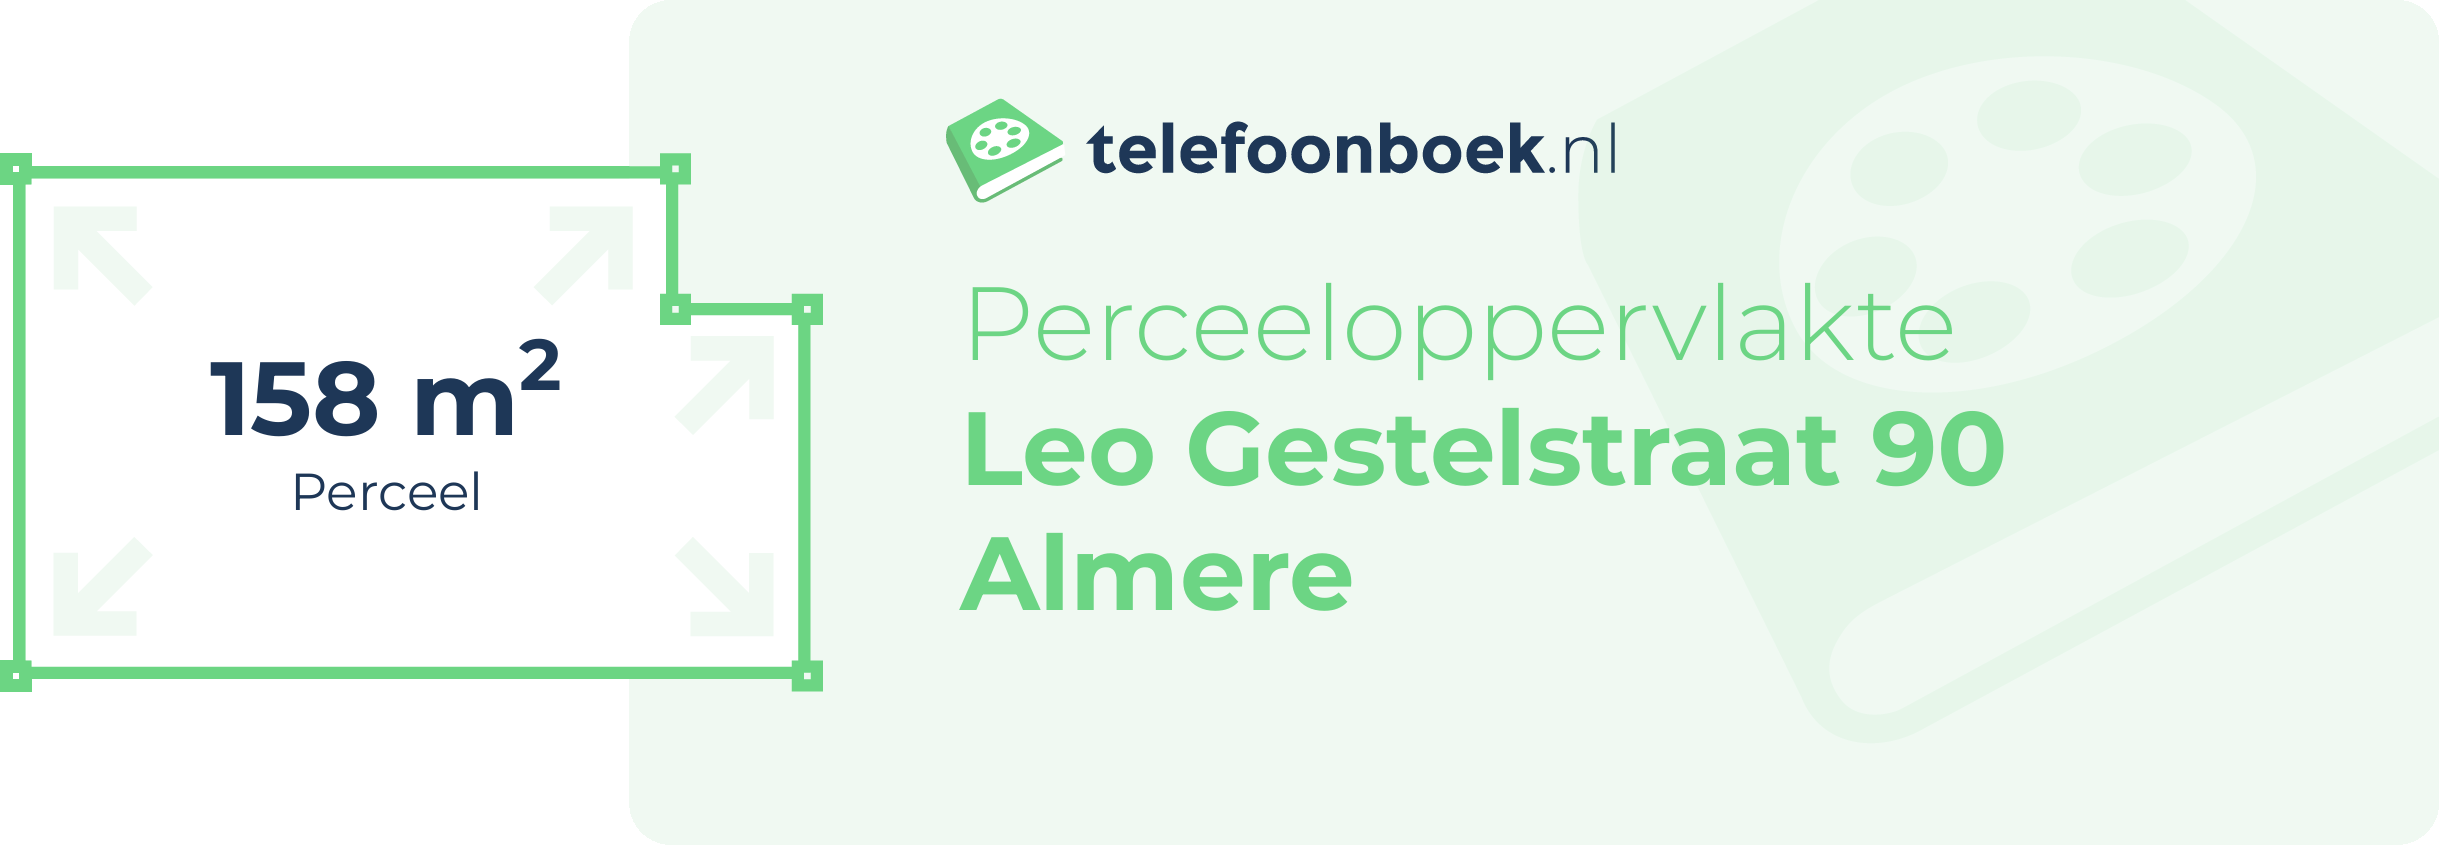 Perceeloppervlakte Leo Gestelstraat 90 Almere